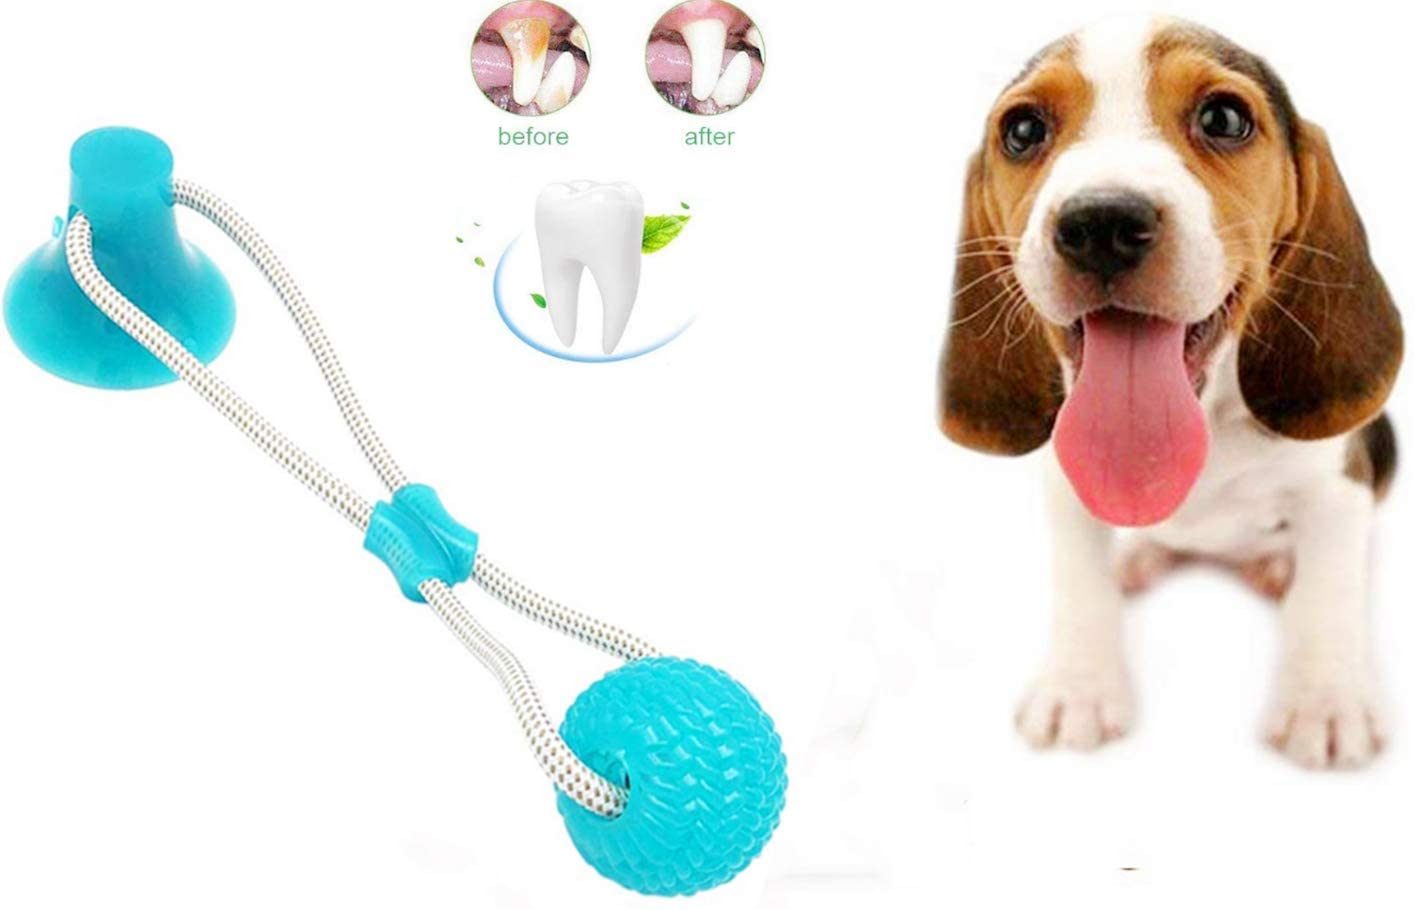  Nifogo Pet Molar Bite Toy ，Juguete Multifuncional para mordedura de Molar Juguete con Ventosa Juguetes para morder para Perros Juguetes para Perros Molar para Mascotas (Verde, 1 pcs) 